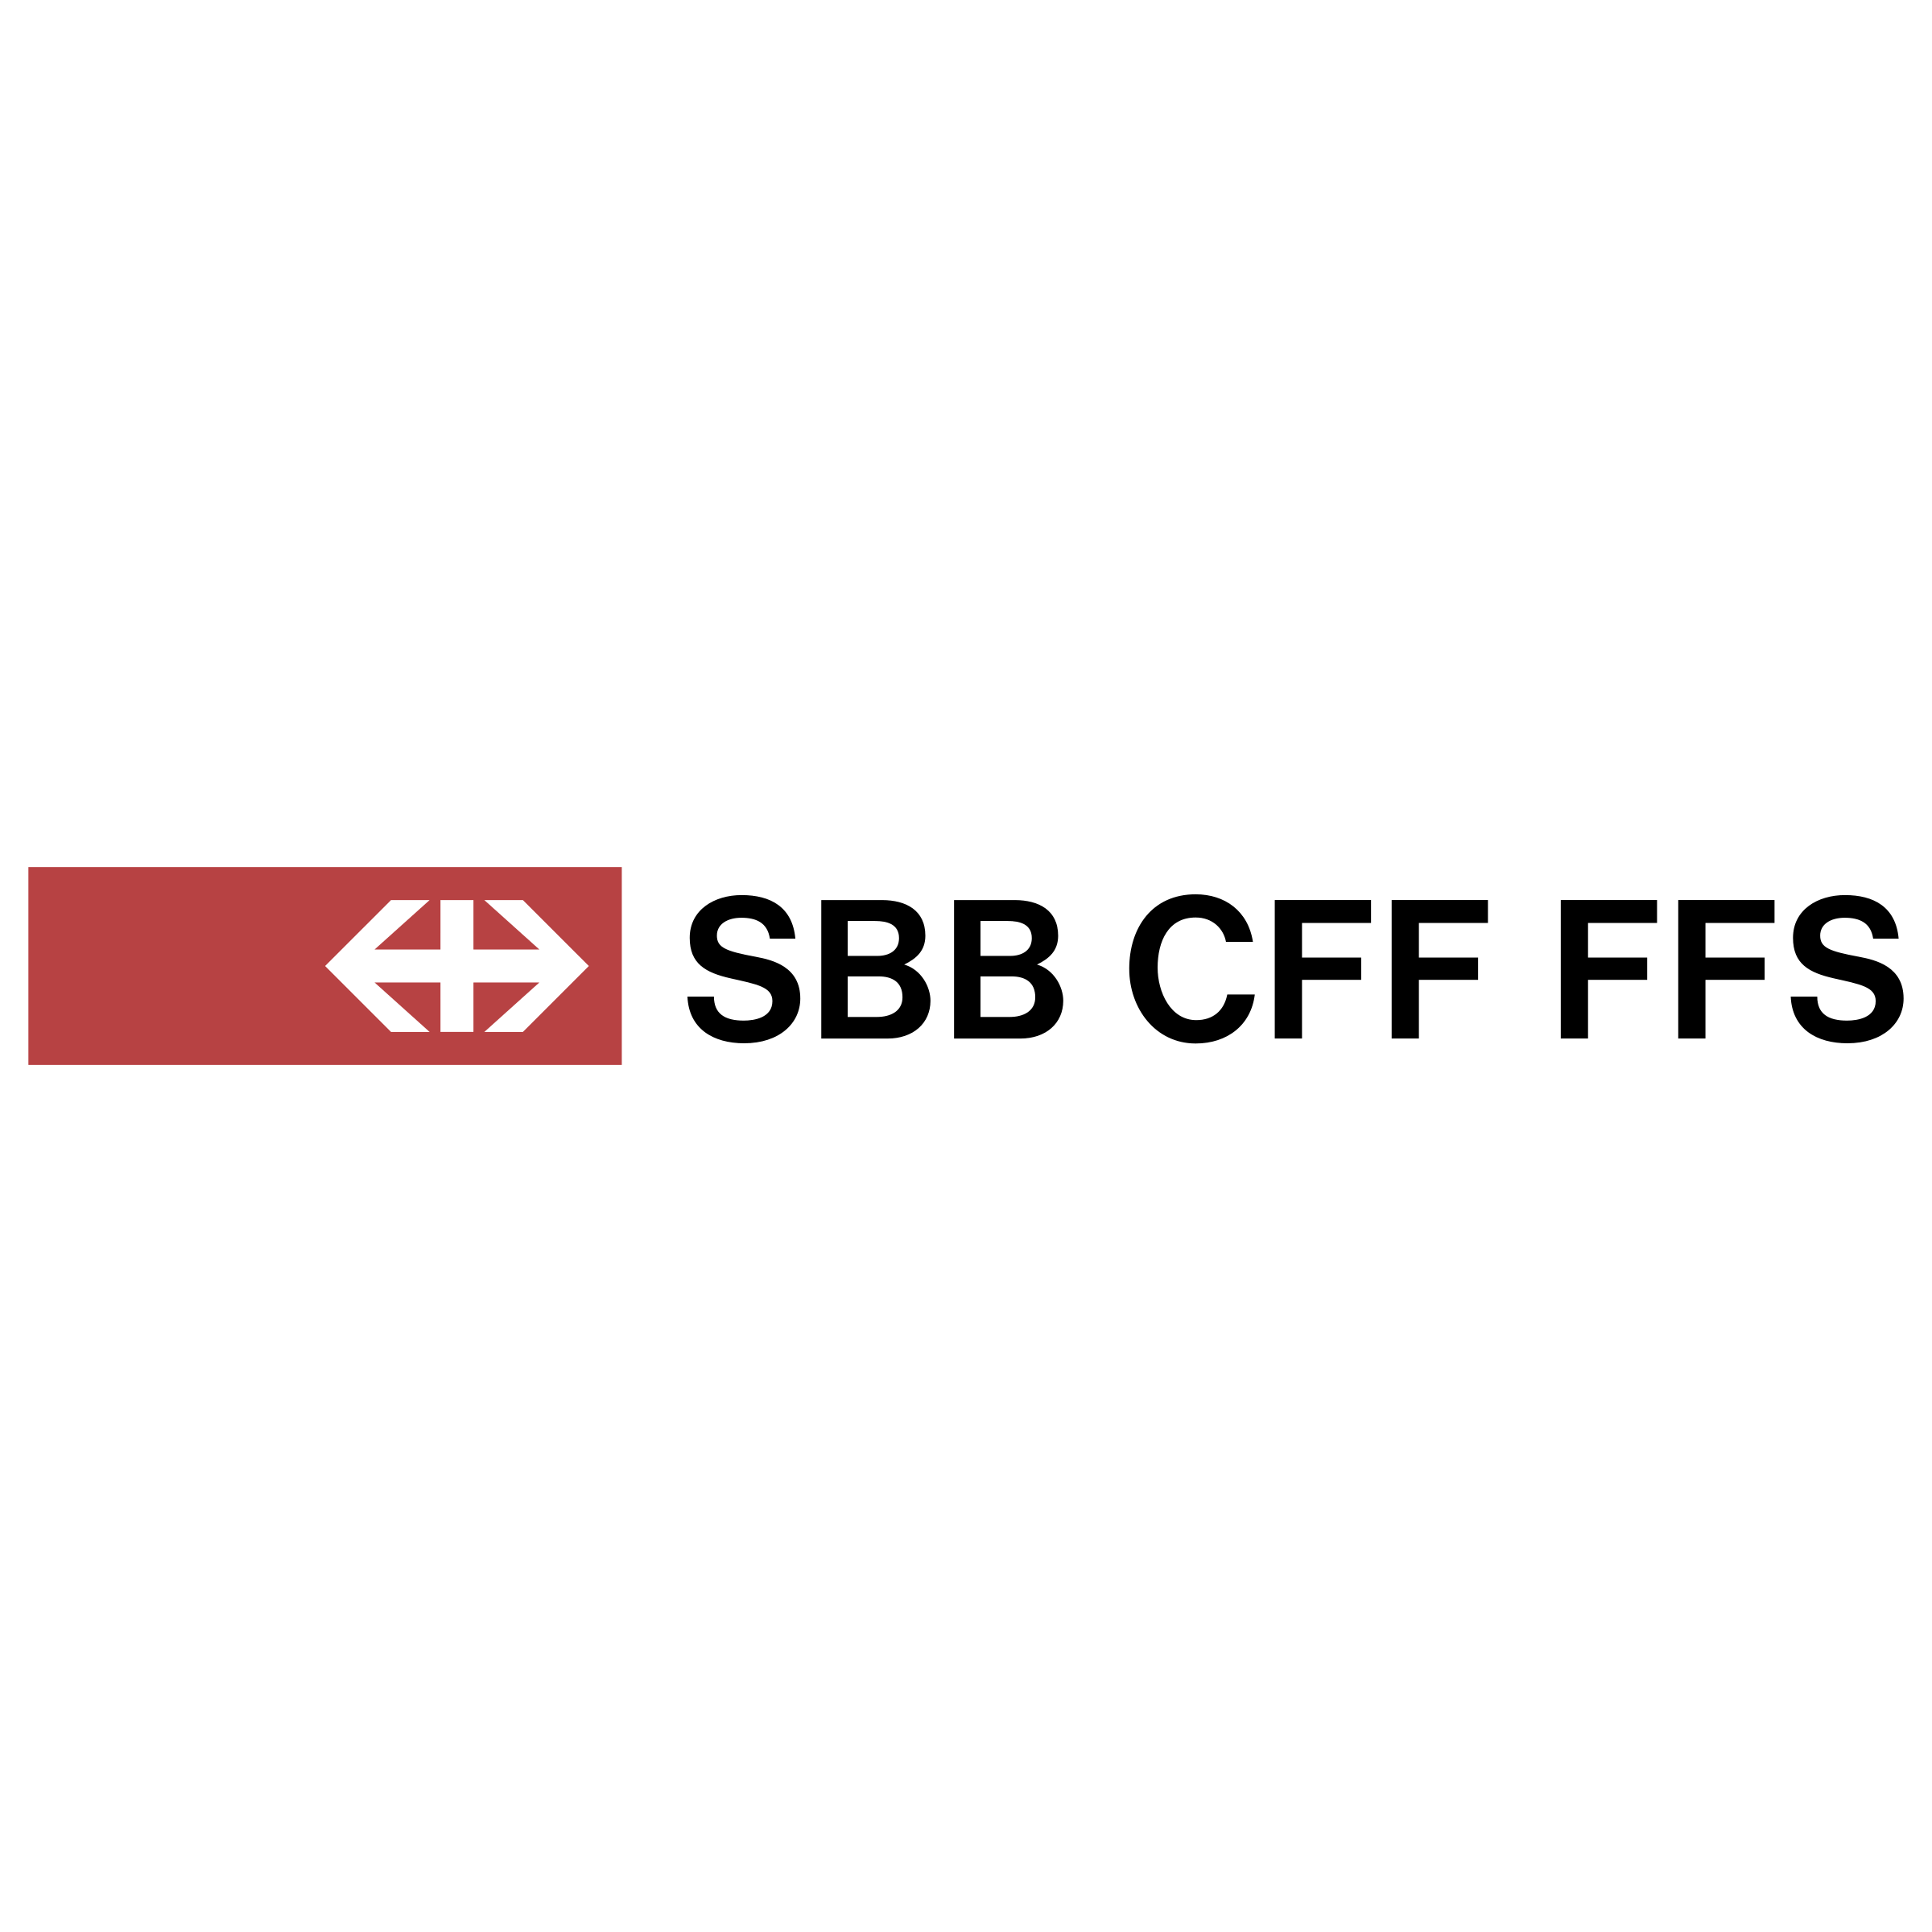 CFF Logo - SBB CFF FFS Logo PNG Transparent & SVG Vector